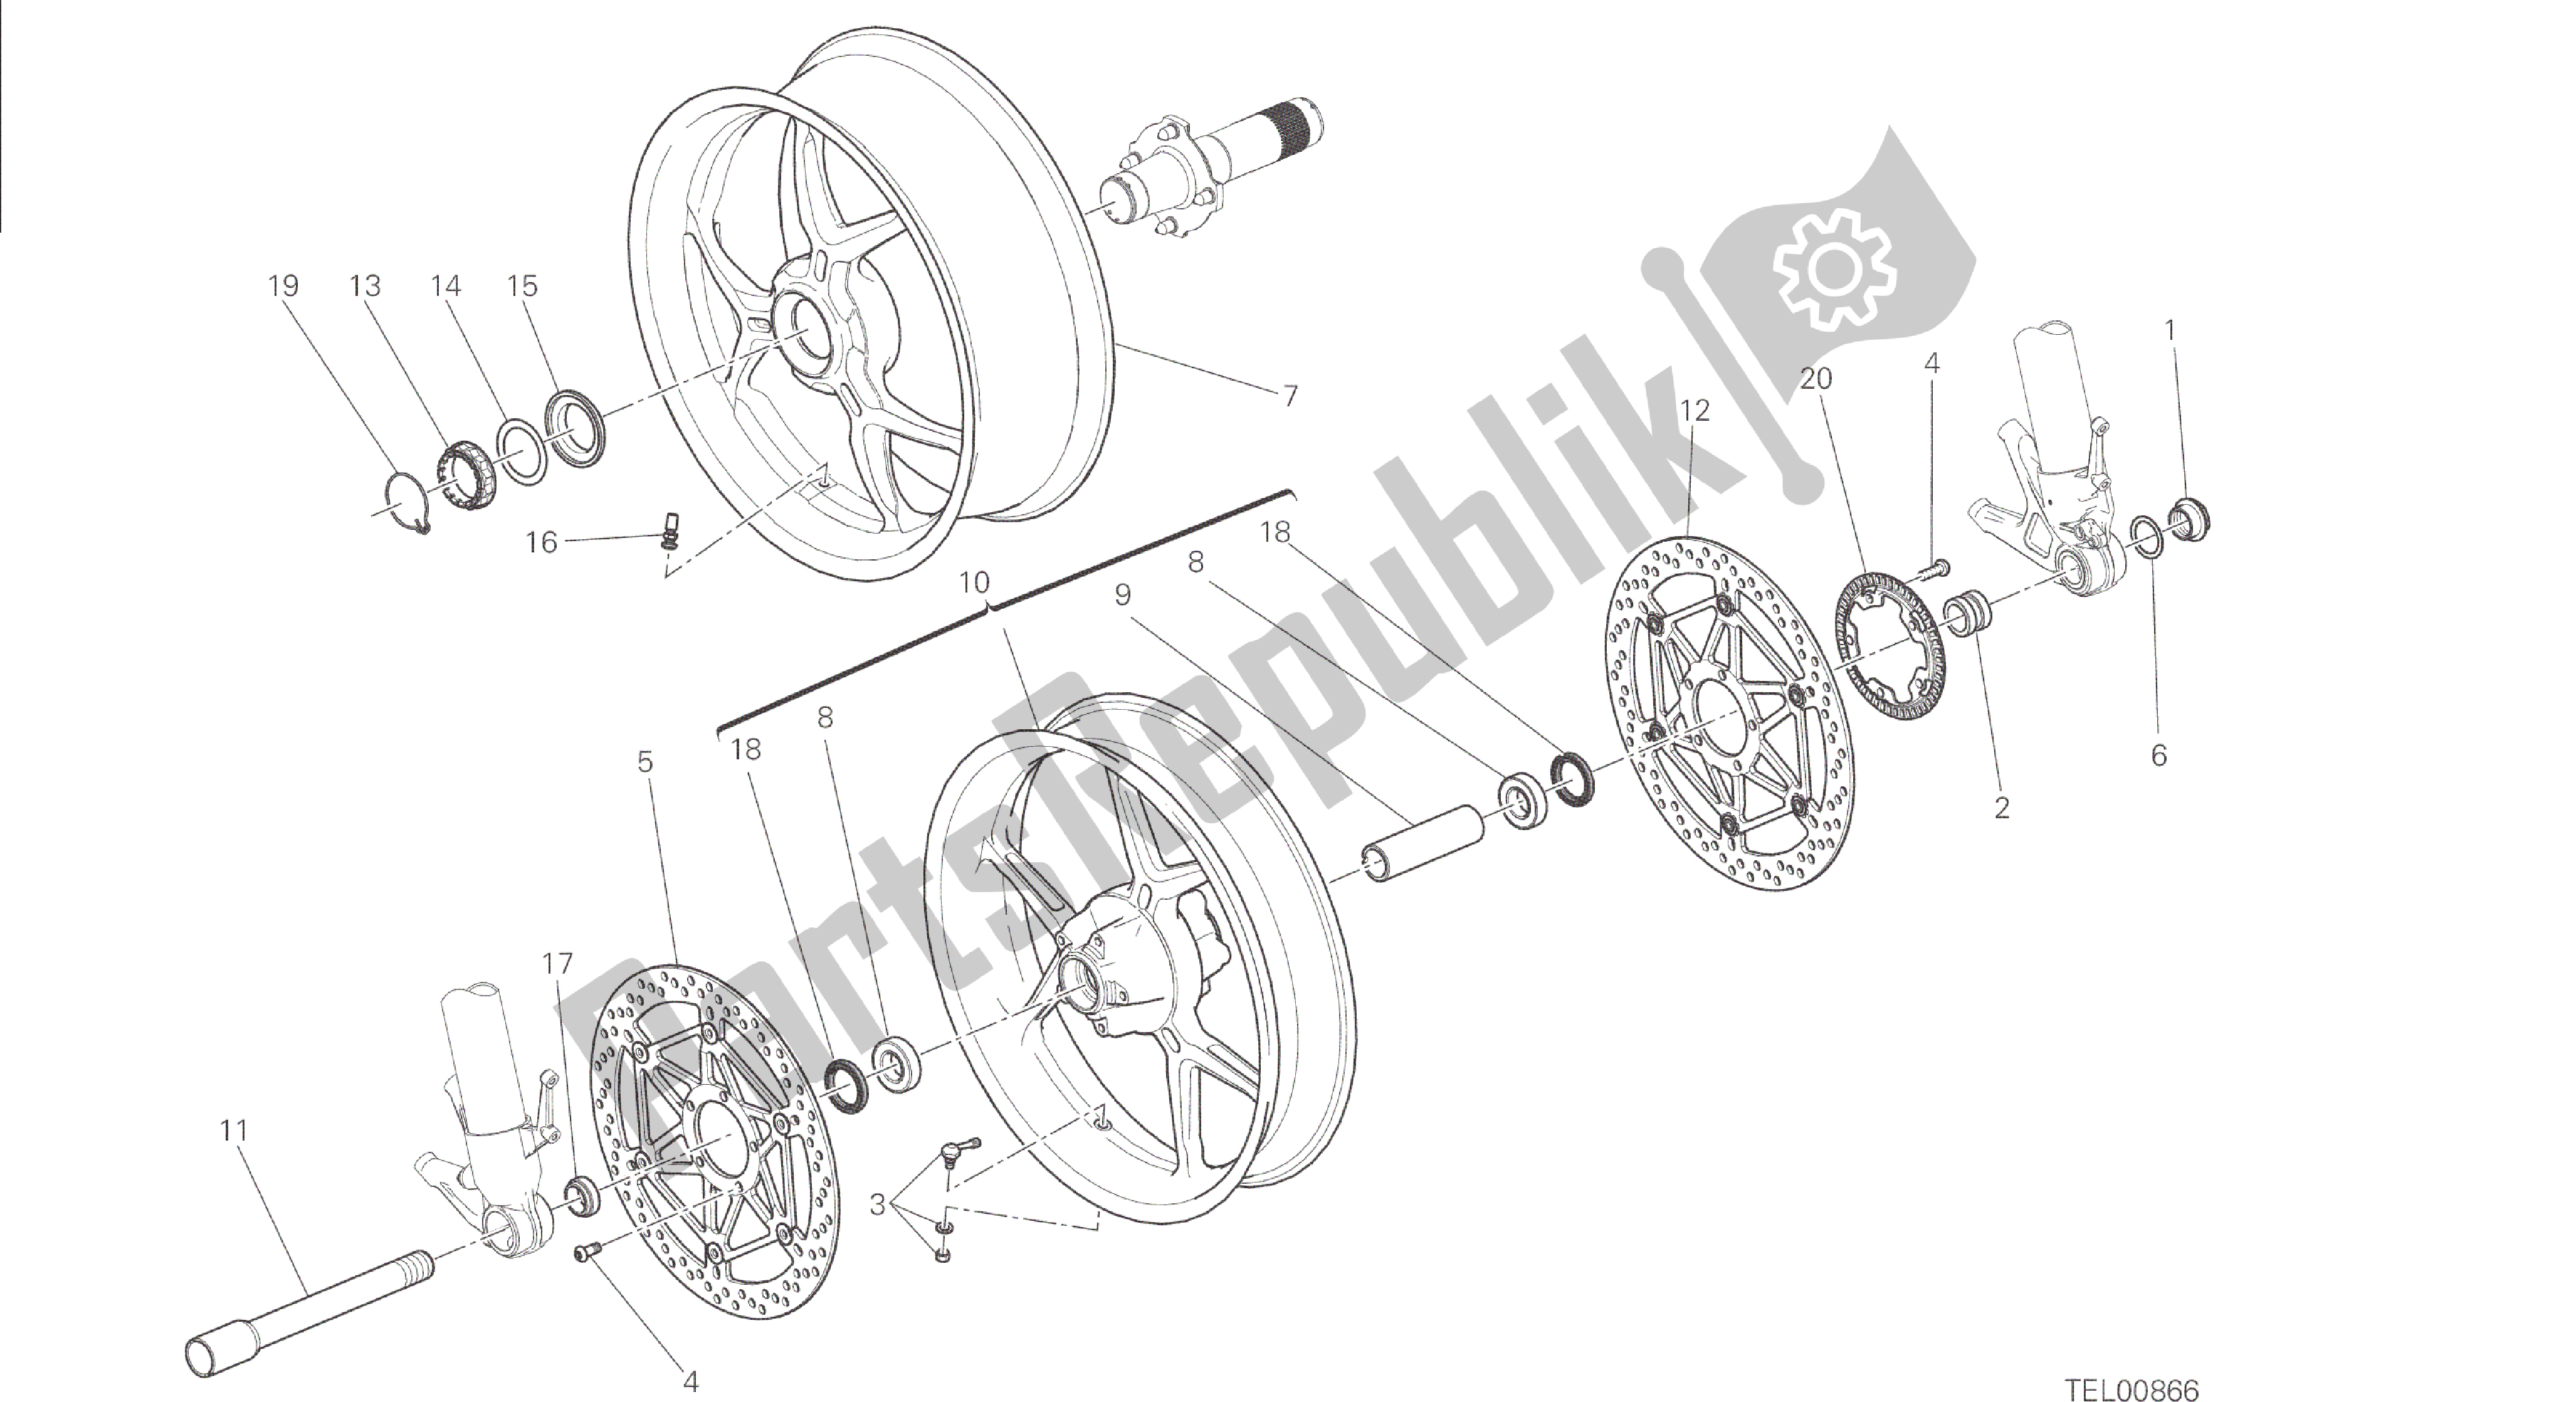 Alle onderdelen voor de Tekening 026 - Ruota Anteriore E Posteriore [mod: 1299; Xst: Aus, Eur, Fra, Jap, Twn] Groepsframe van de Ducati Panigale 1299 2015